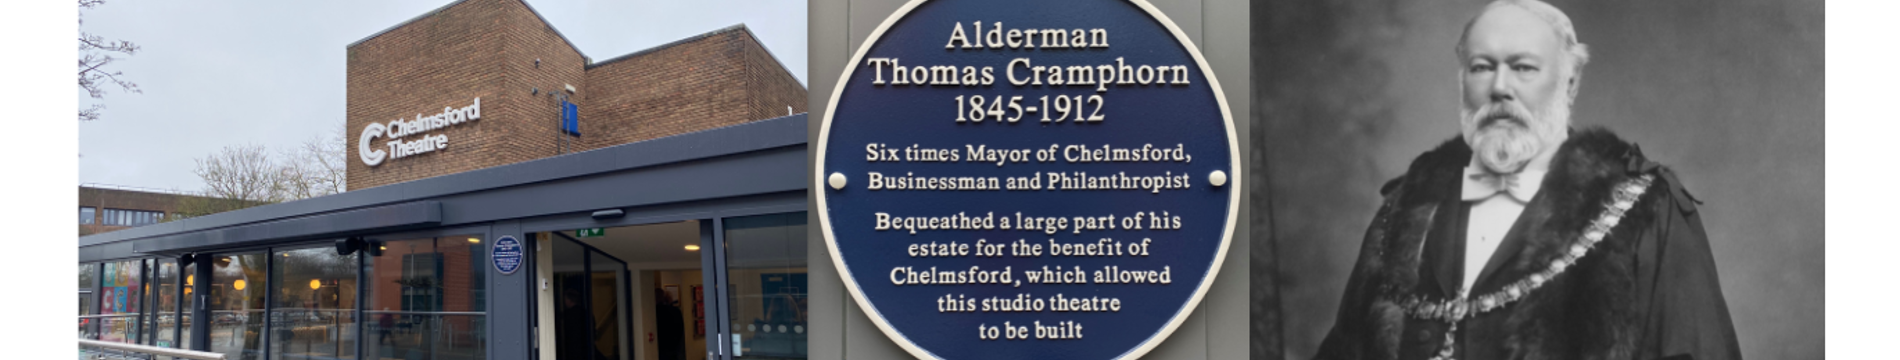 Alderman Cramphorn image